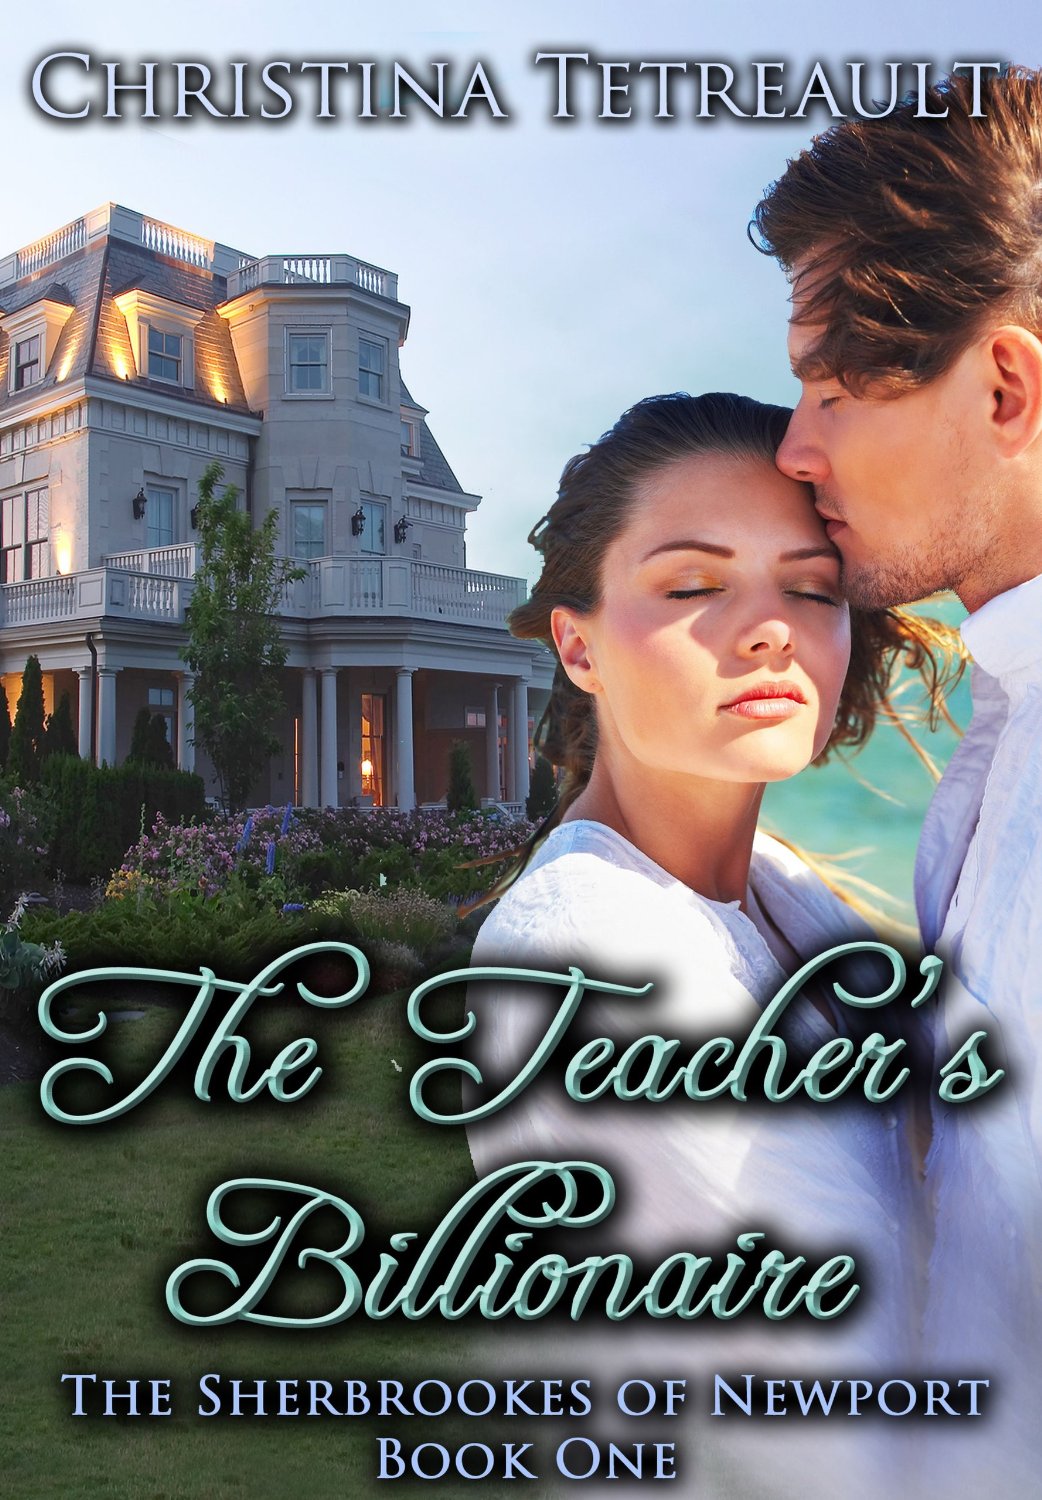 The Teacher’s Billionaire (The Sherbrookes of Newport Book 1) by Christina Tetreault